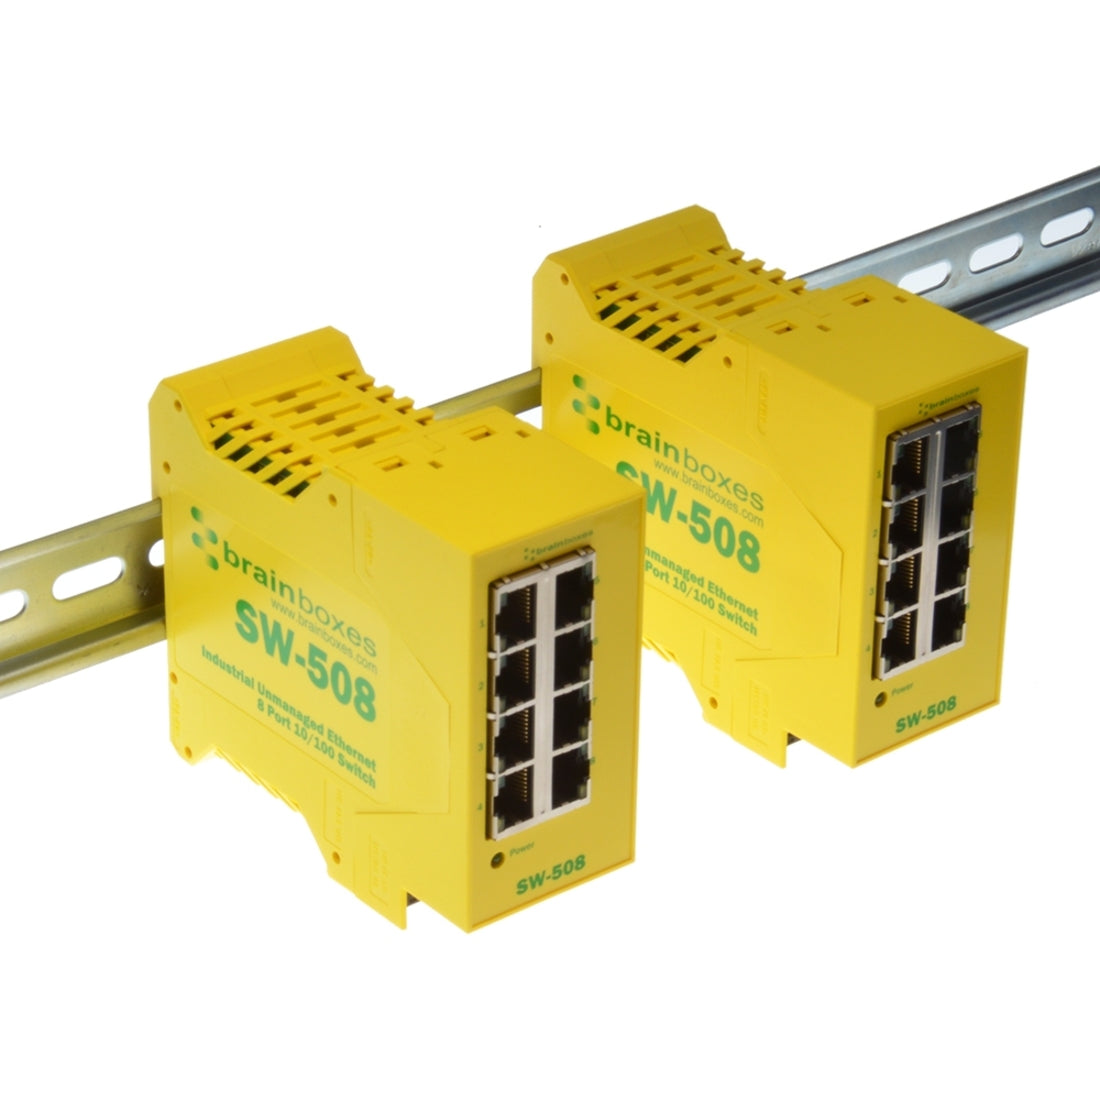 Brainboxes SW-508 Industrial Ethernet 8 Port Switch DIN Rail Mountable, Galvanic Isolation, Lifetime Warranty